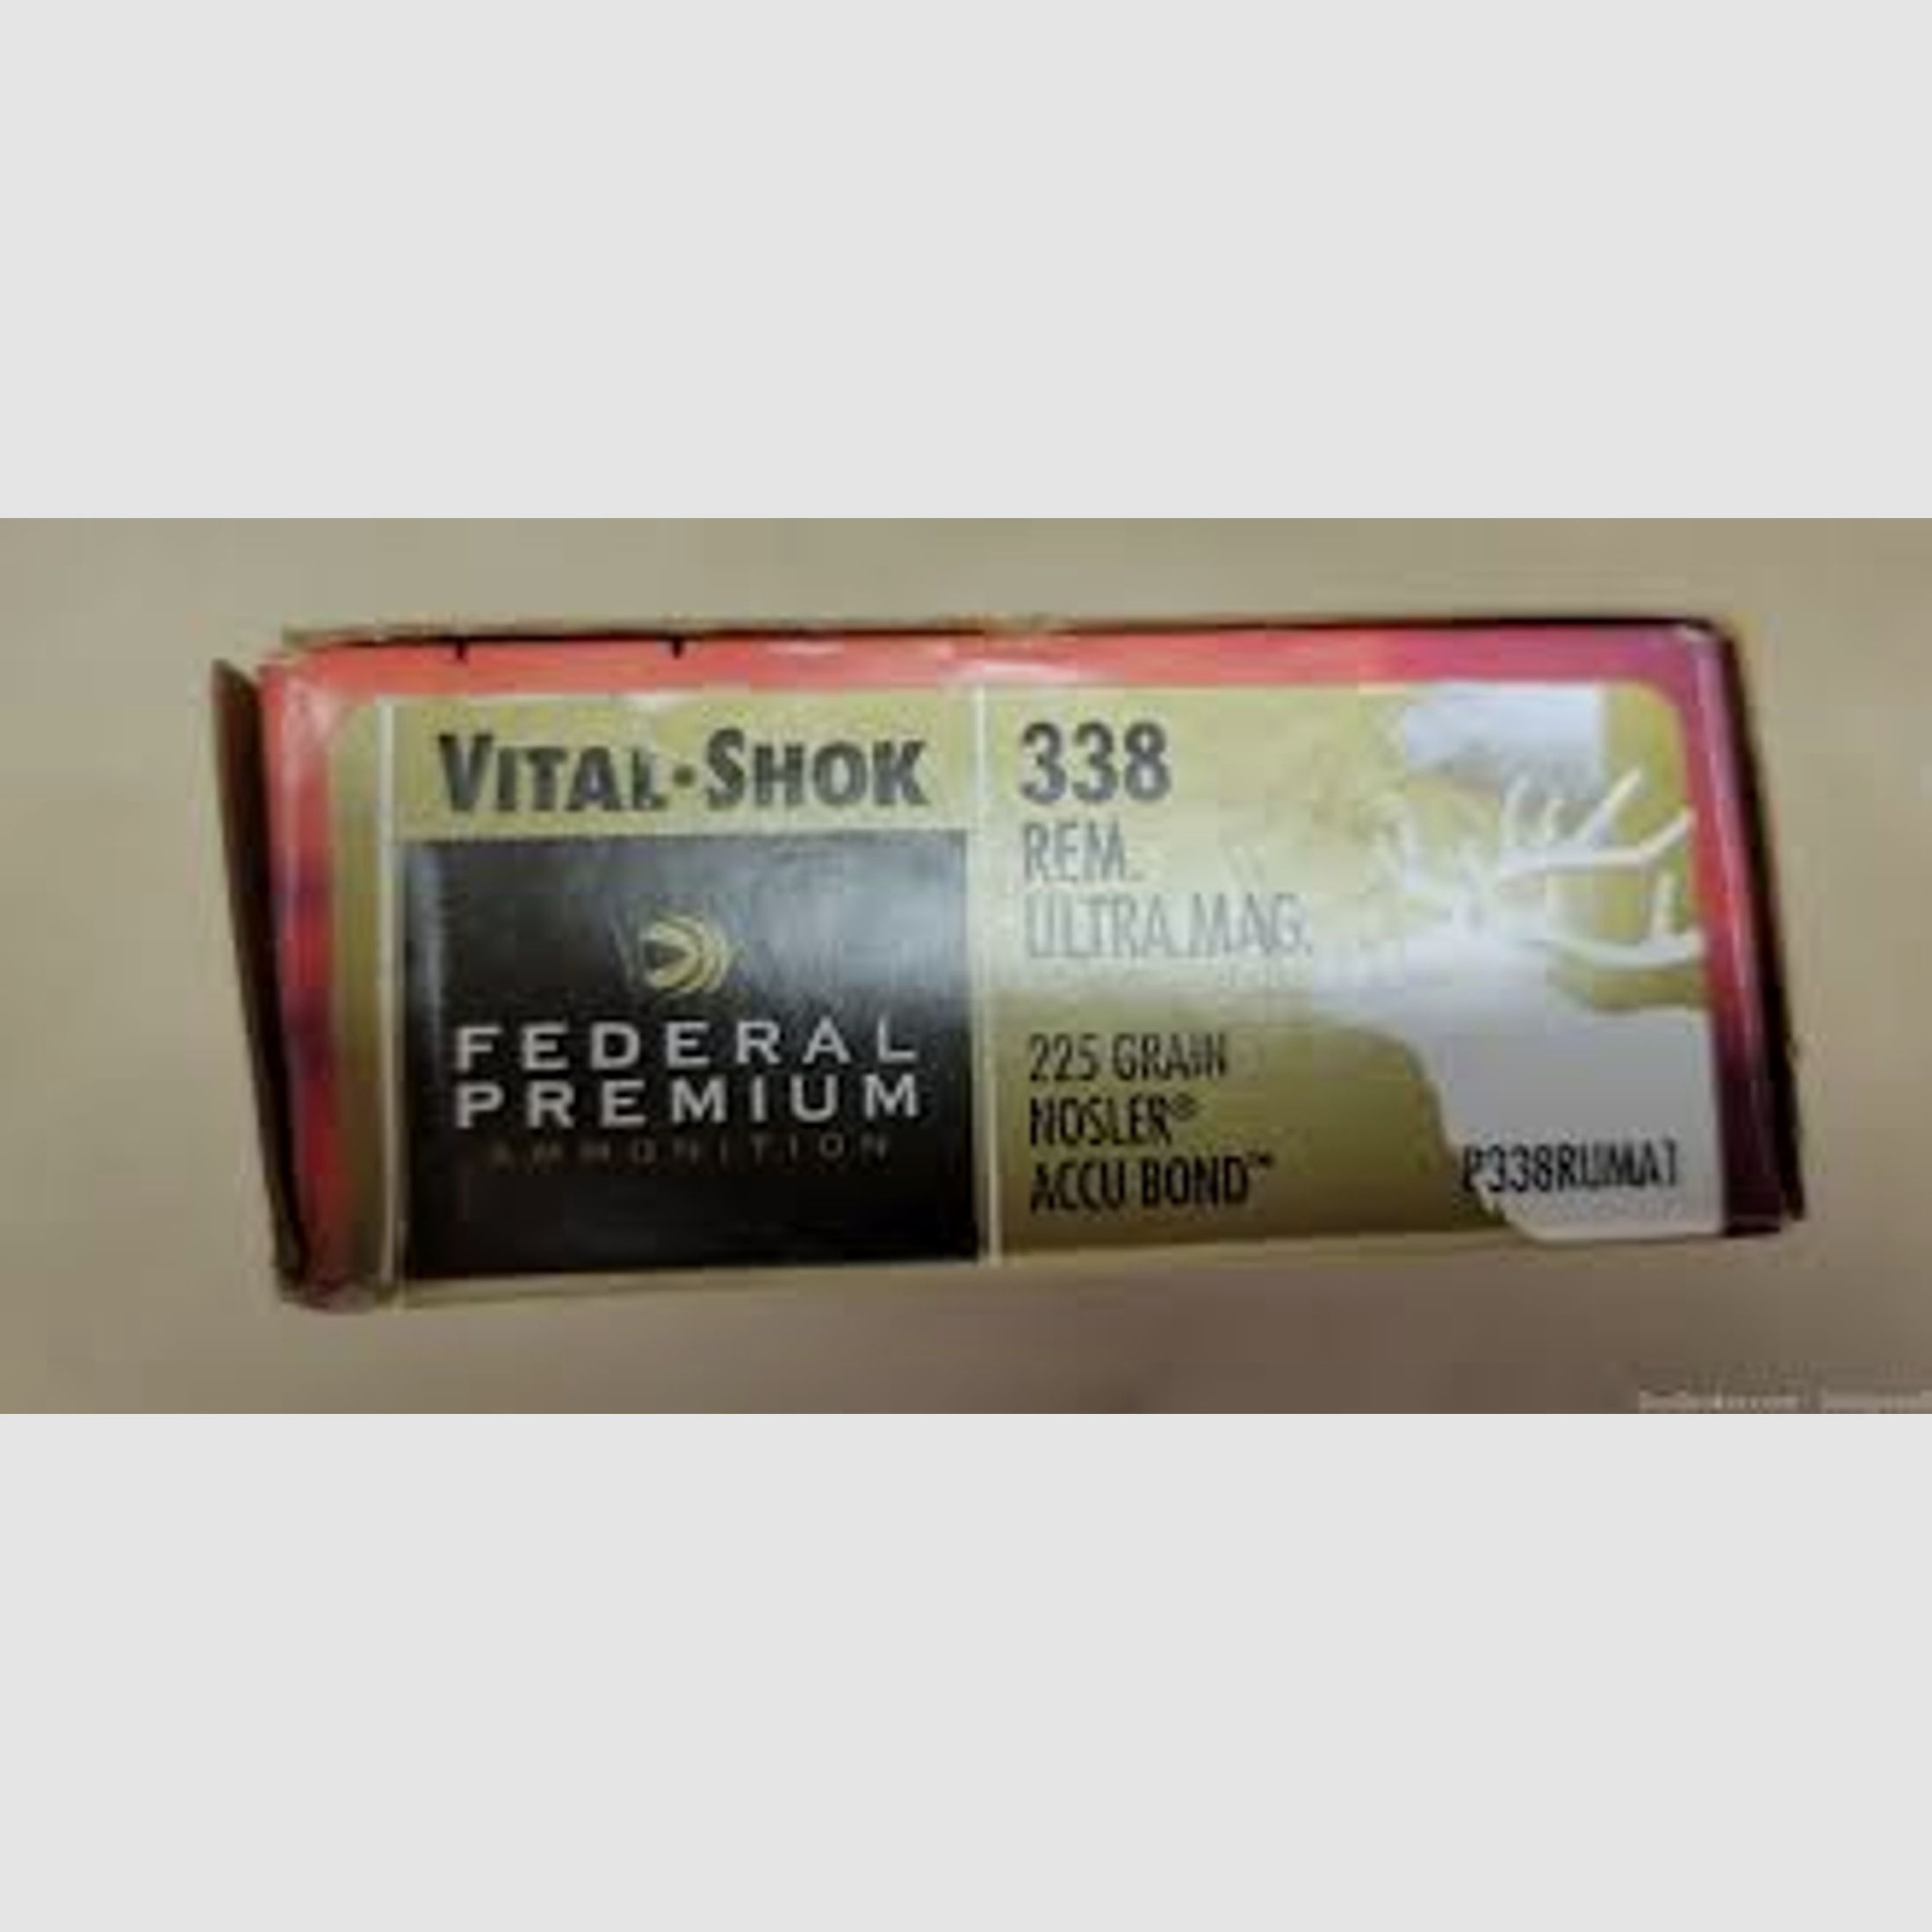 Büchsenpatronen Federal Premium Vital Shok Nosler Accu Bond .338 REM Ultra Mag. 225gr. !!!